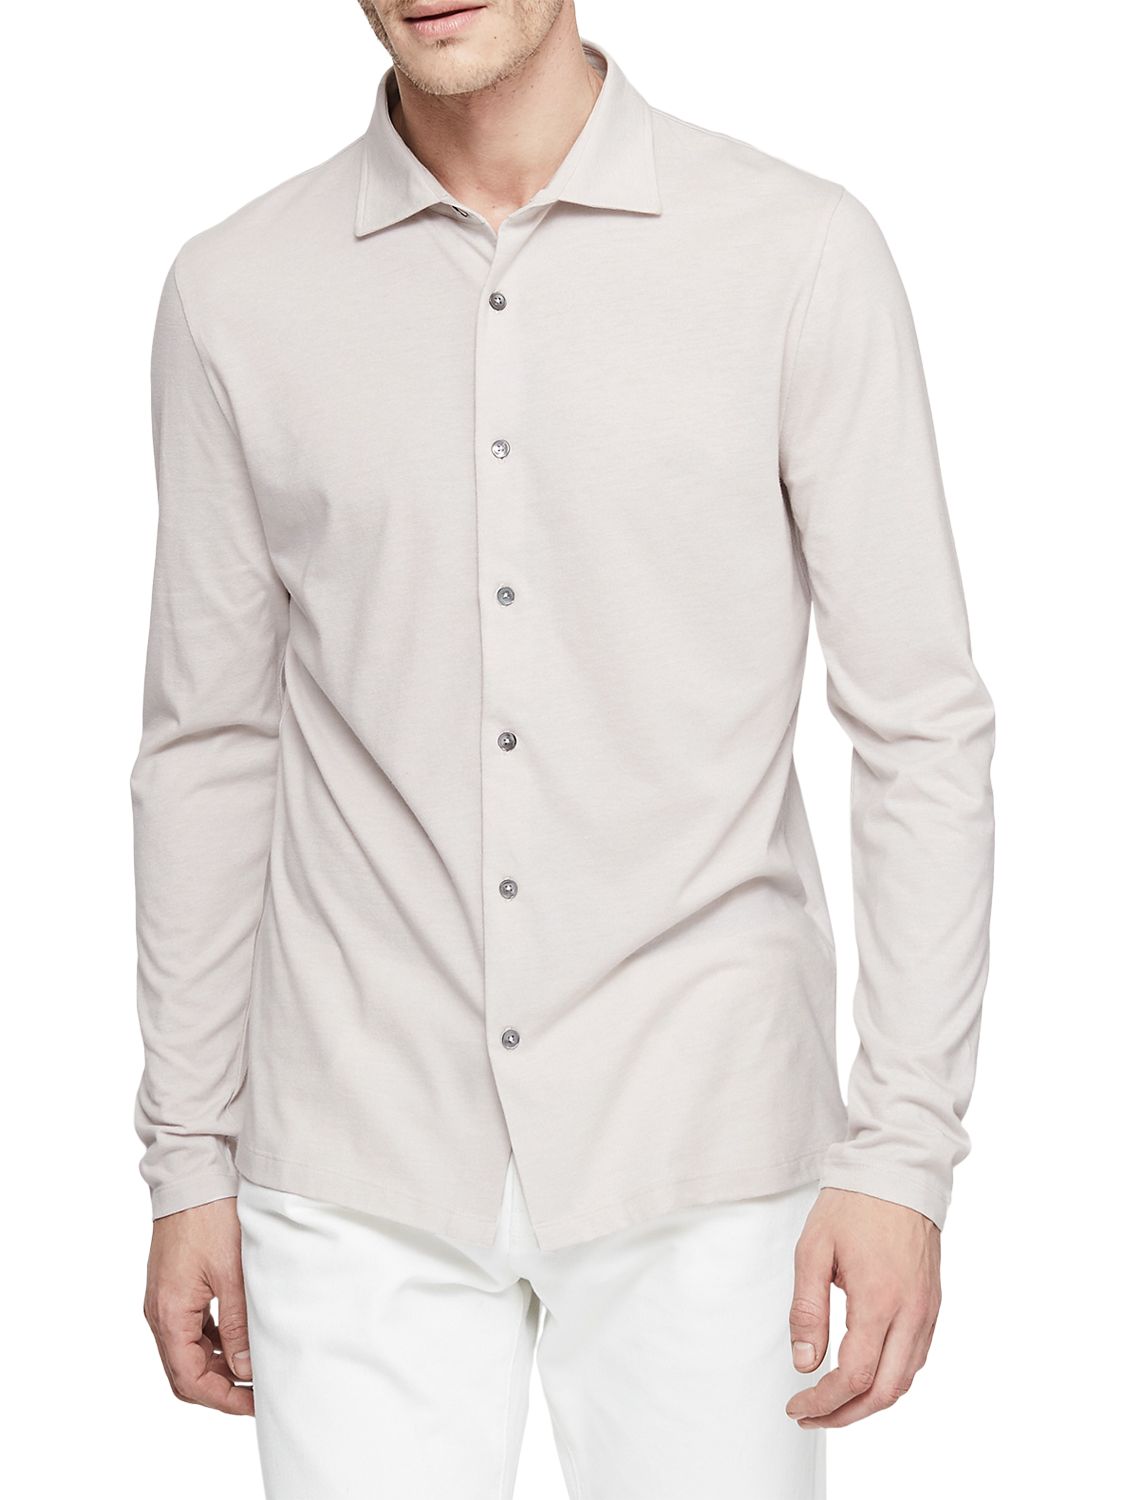 Reiss Oliver Jersey Shirt, Soft Grey, S